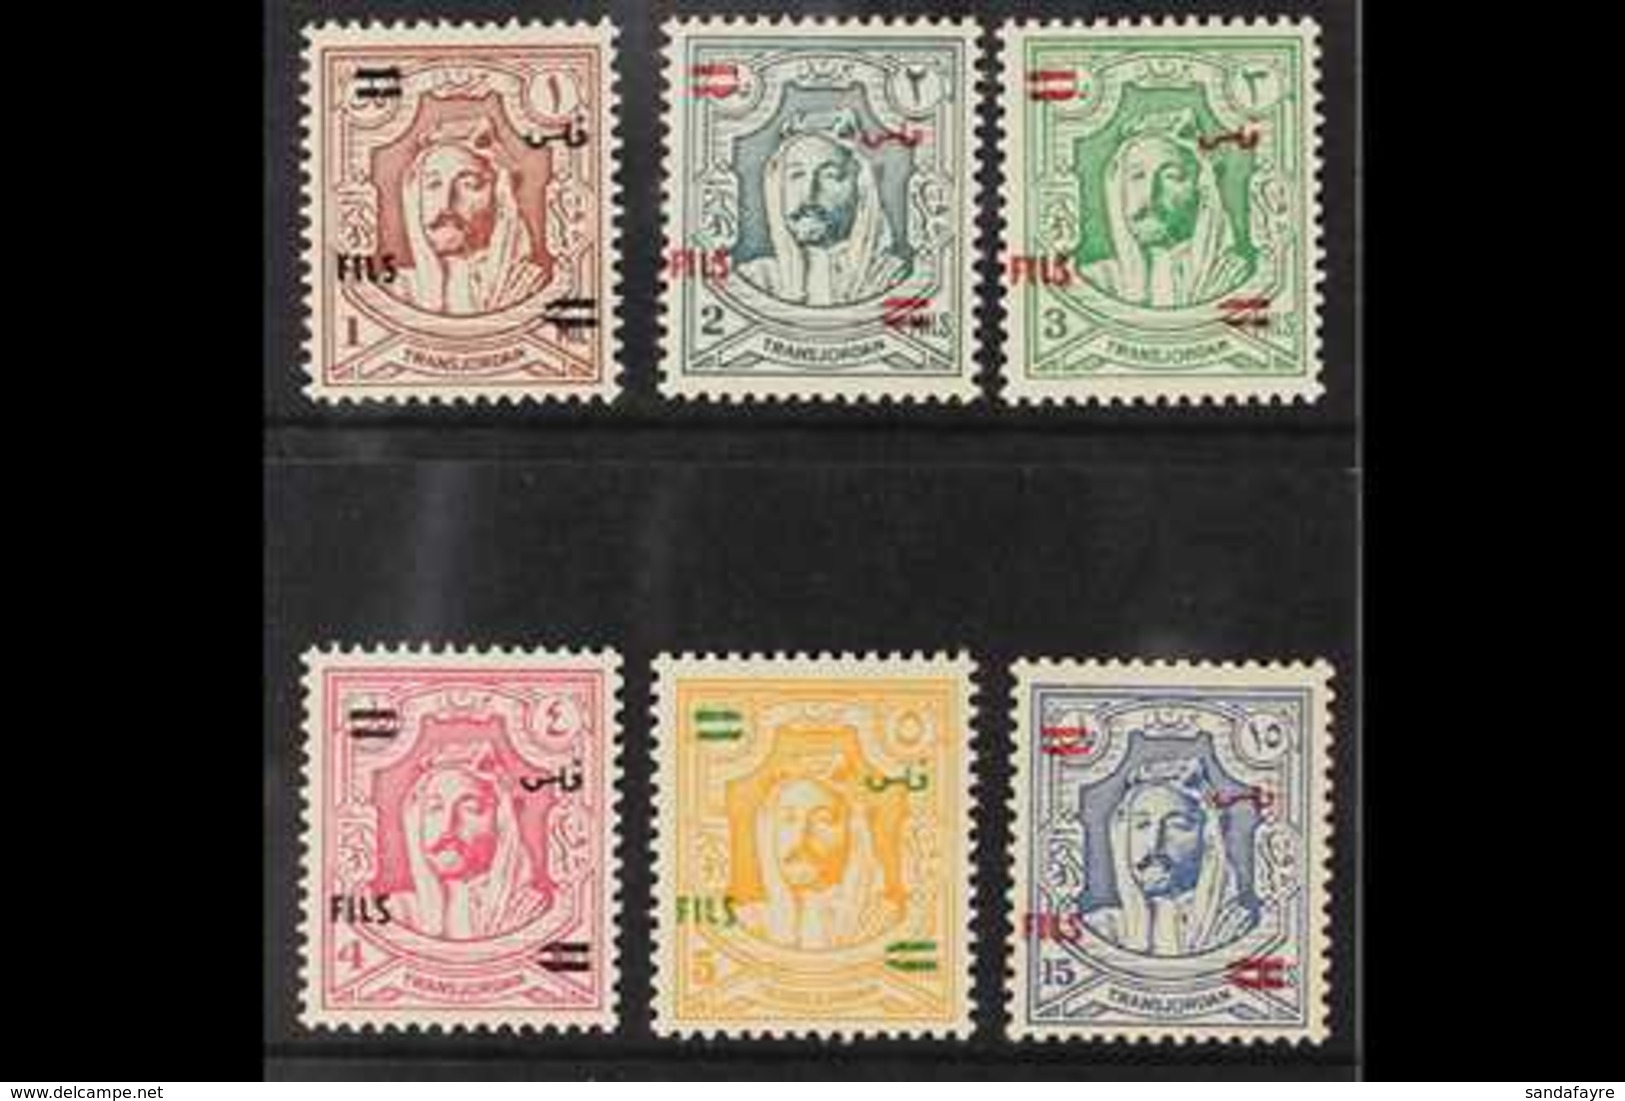 1952  Overprints On 1942 Litho Issues Complete Set, SG 307/12, Never Hinged Mint, Fresh. (6 Stamps) For More Images, Ple - Jordanië